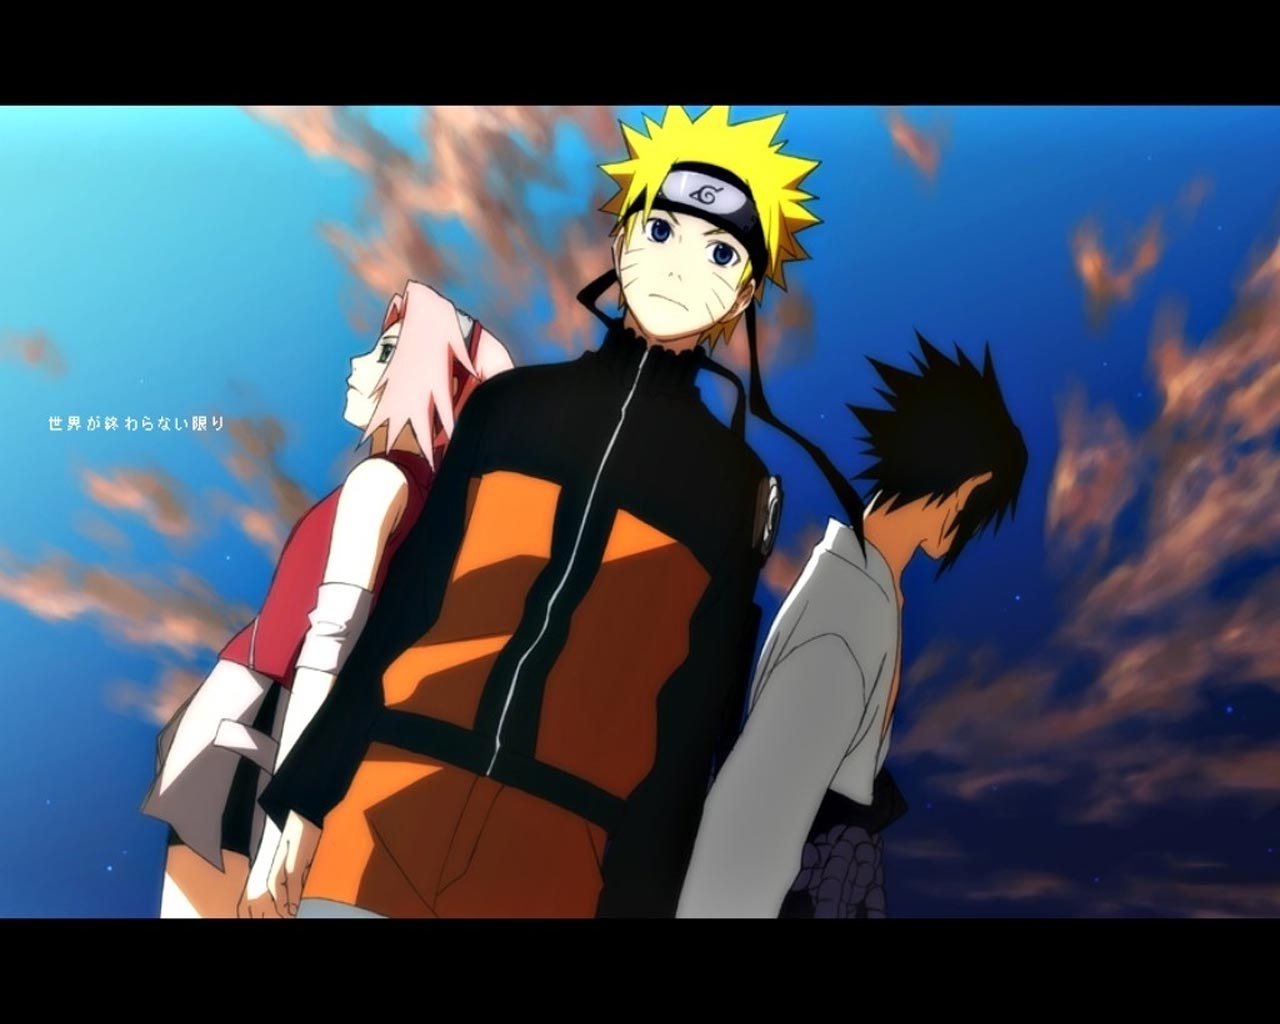 Download Naruto Shippuden Free Anime Wallpaper 1280x1024 | Full HD ...